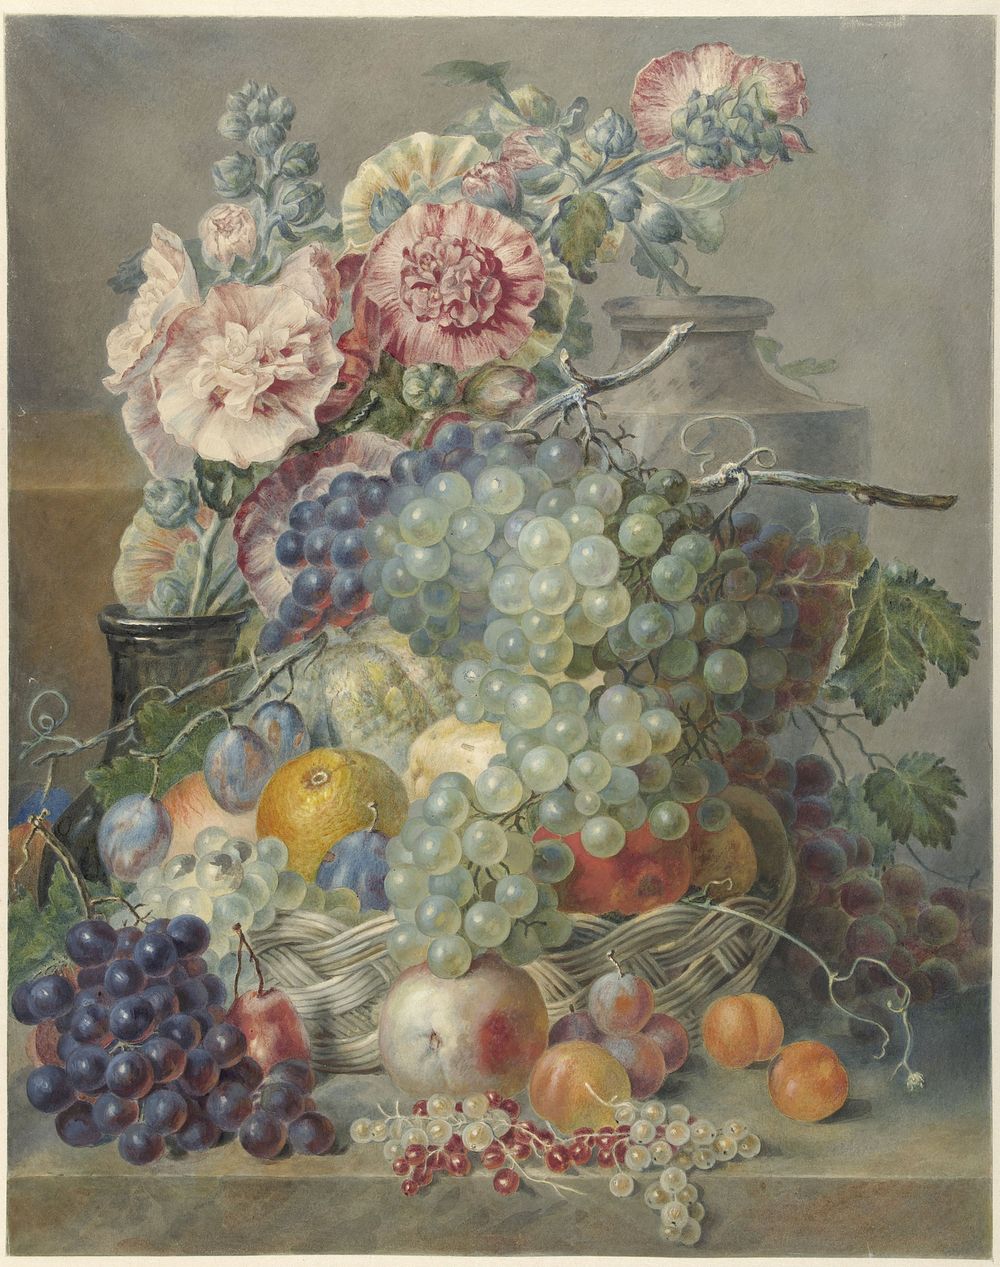 Stilleven met vruchten en bloemen (1781 - 1832) by Annette Reijerman